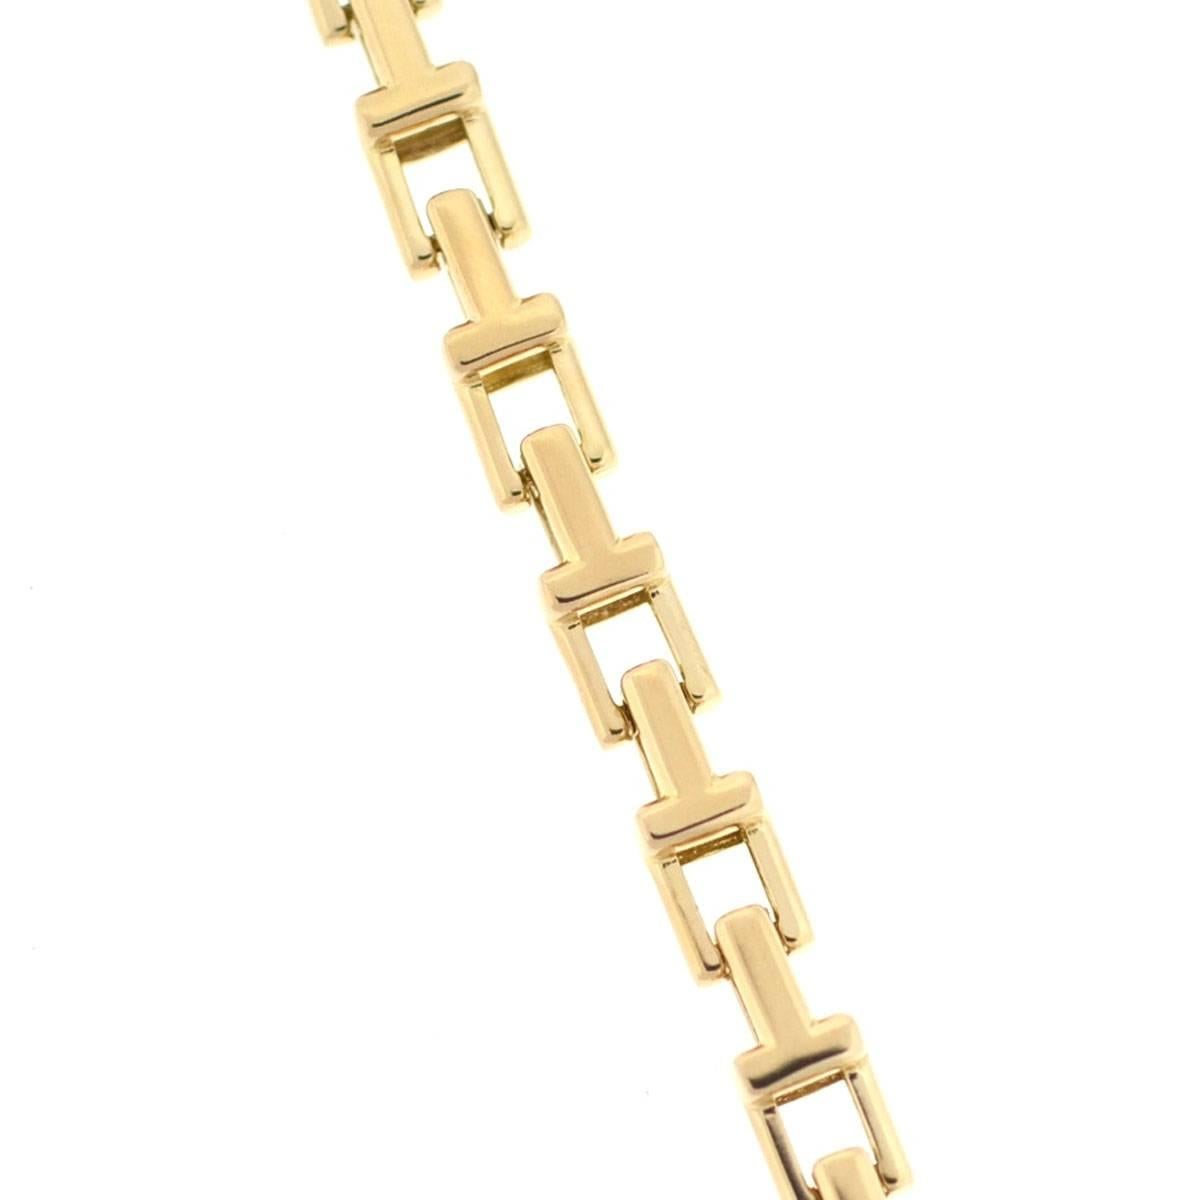 Company-Tiffany & Co.
Style- T  Chain Bracelet
Metal-18k Yellow Gold
Size-8